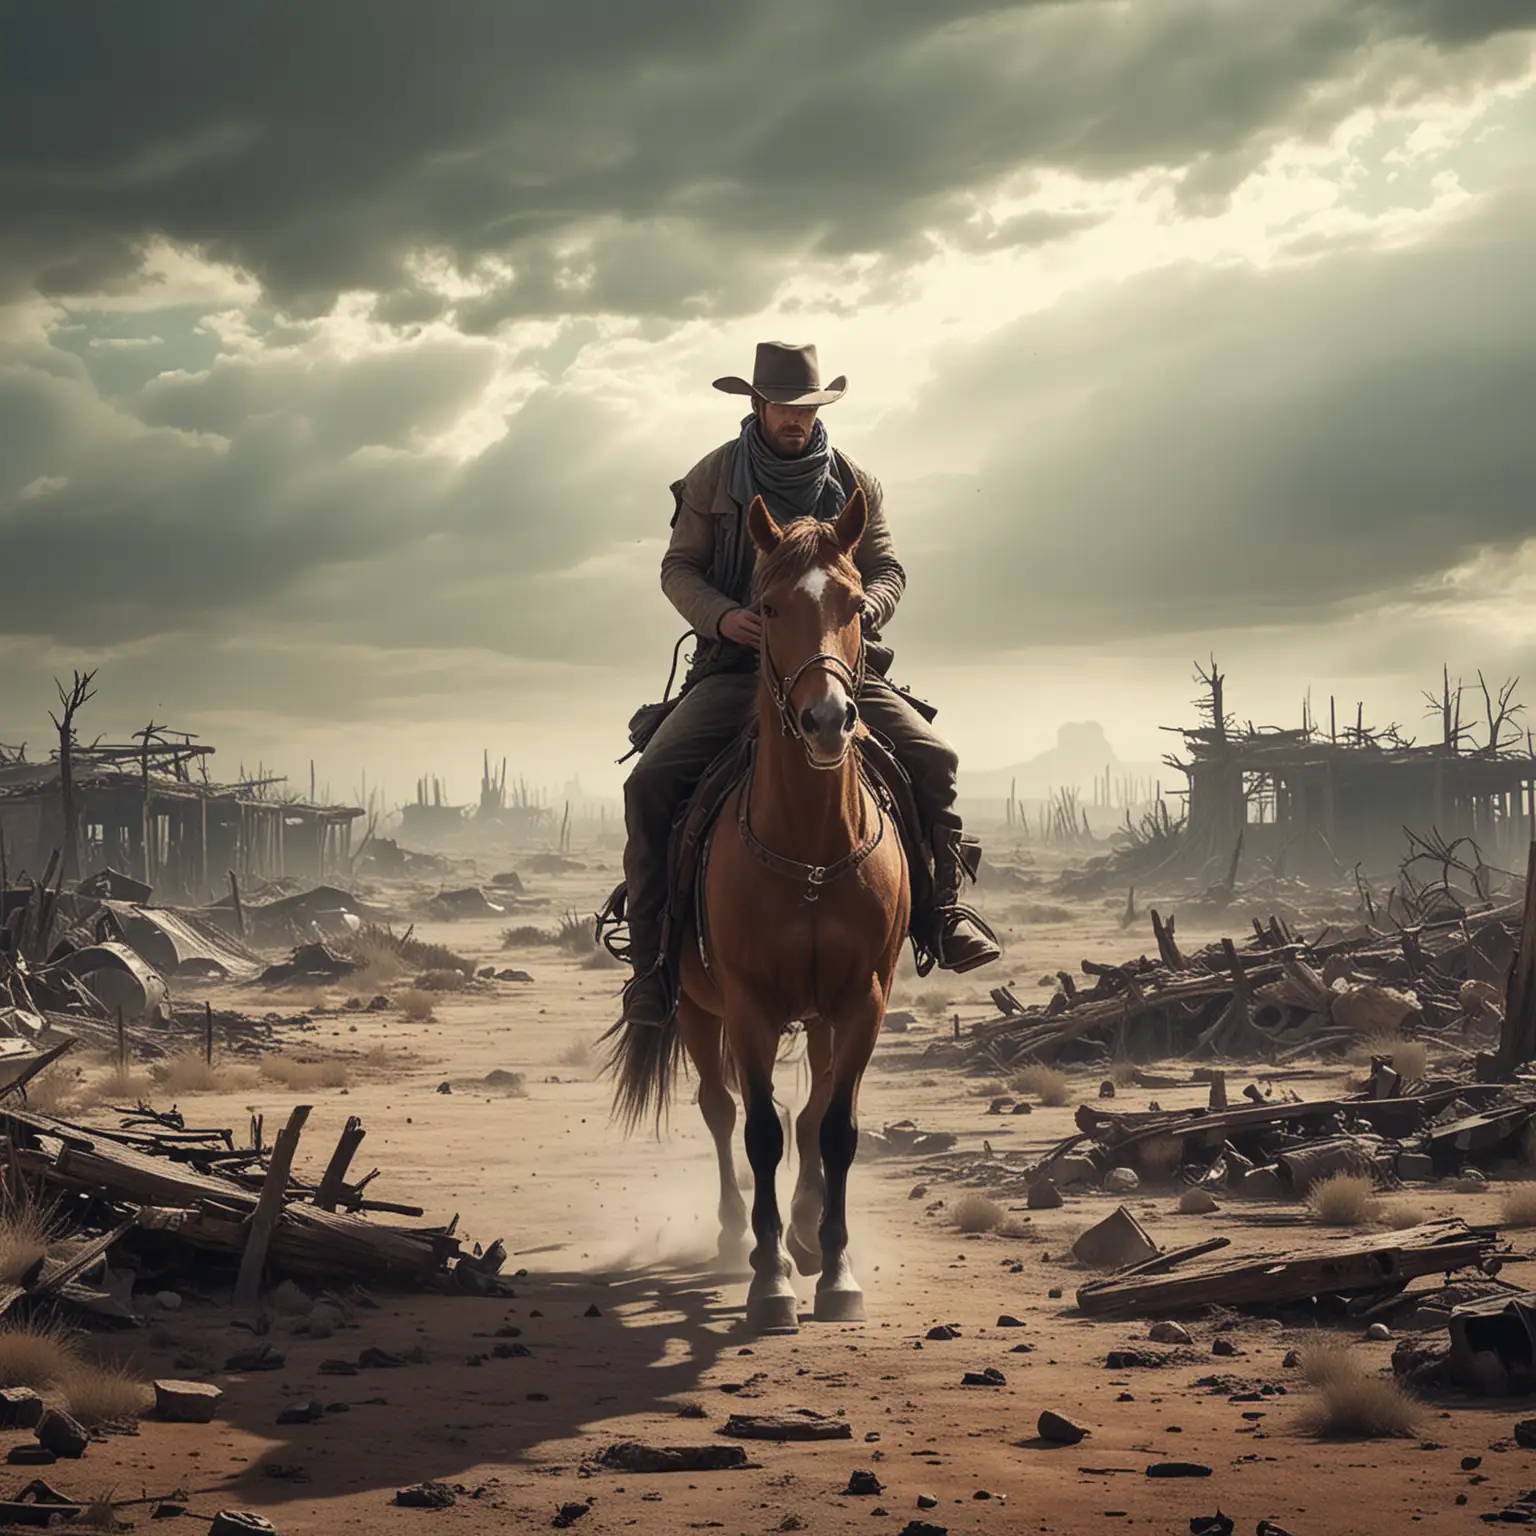 cowboy on a horse riding through a post apocalyptic wasteland